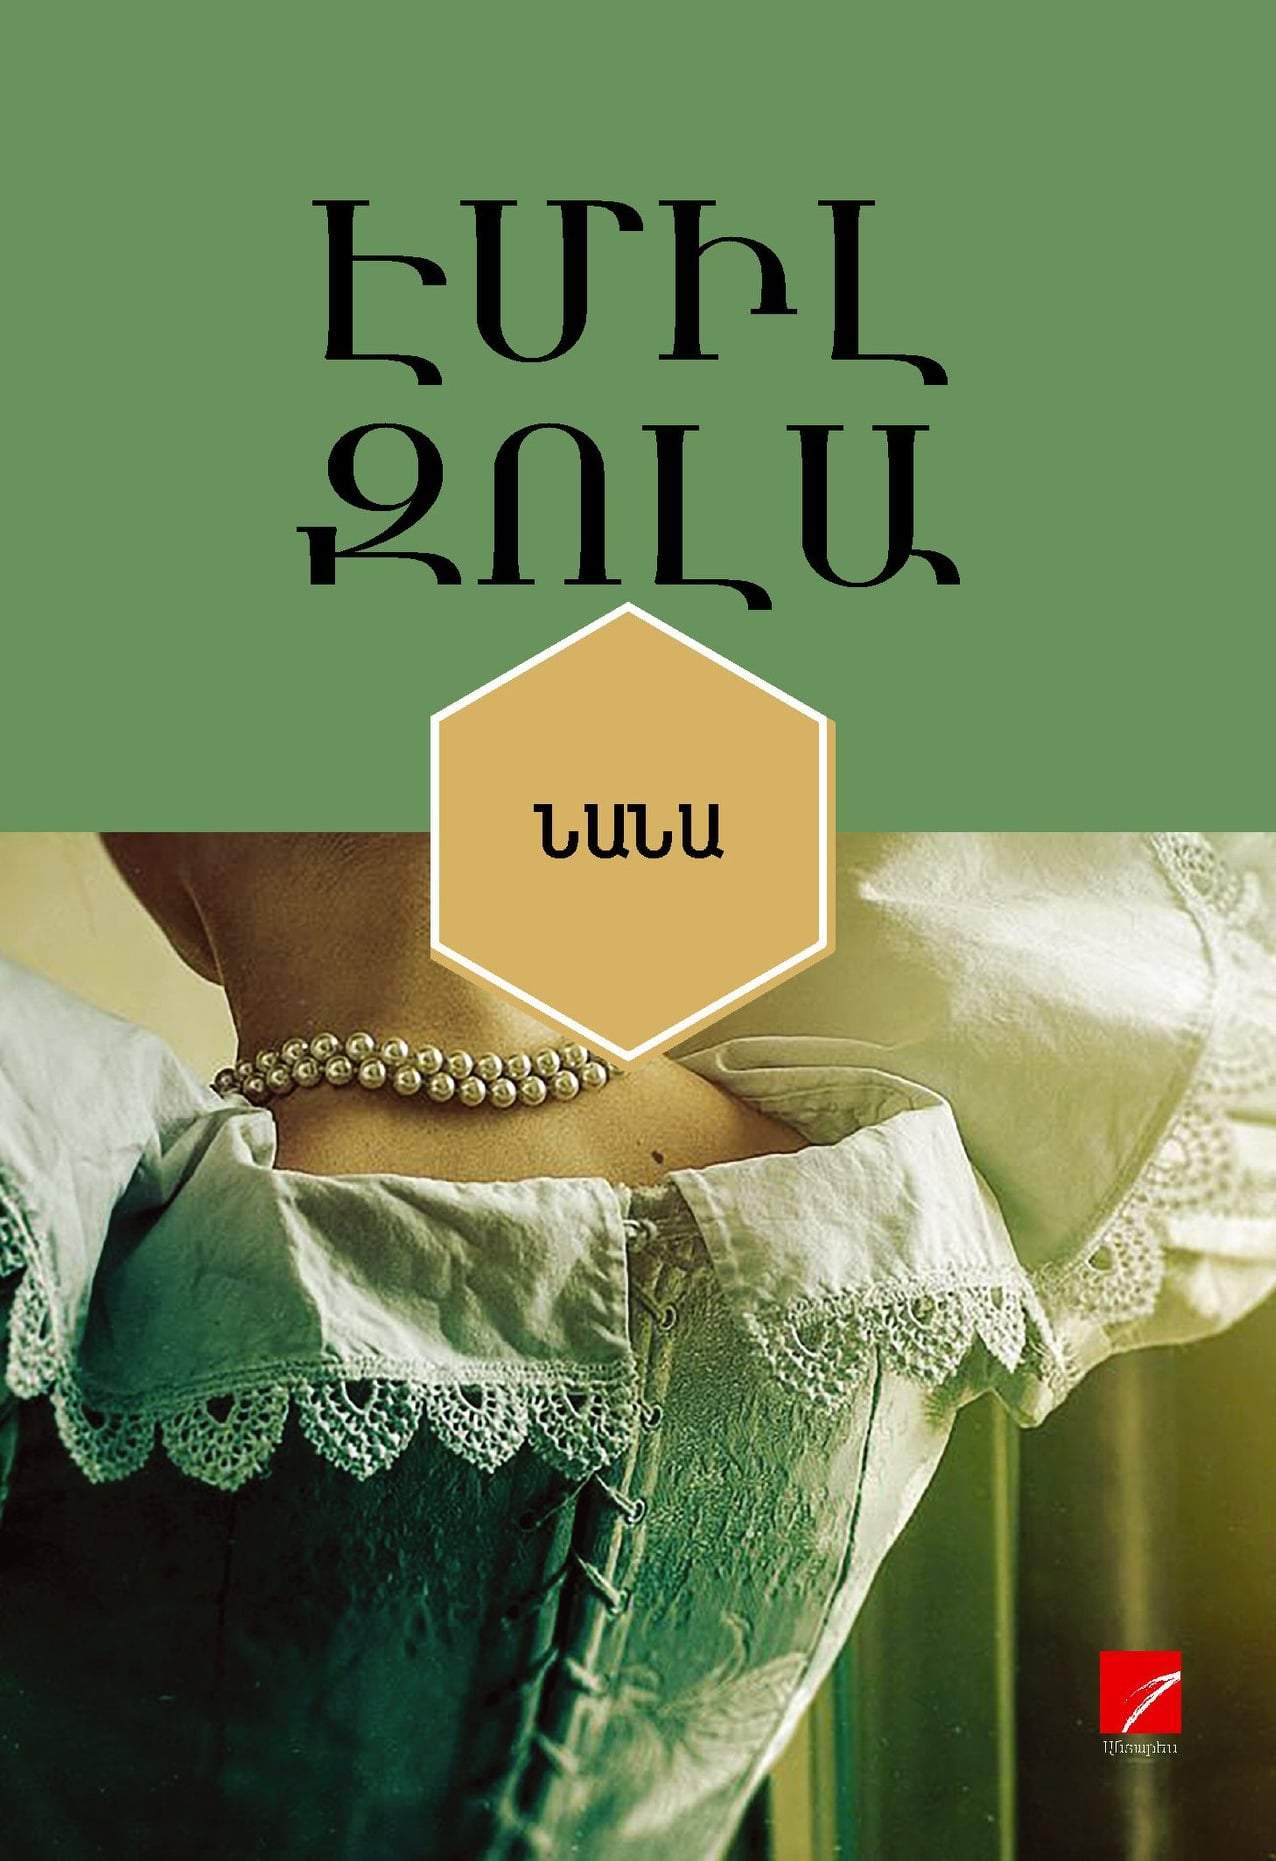 Emile Zola - Nana